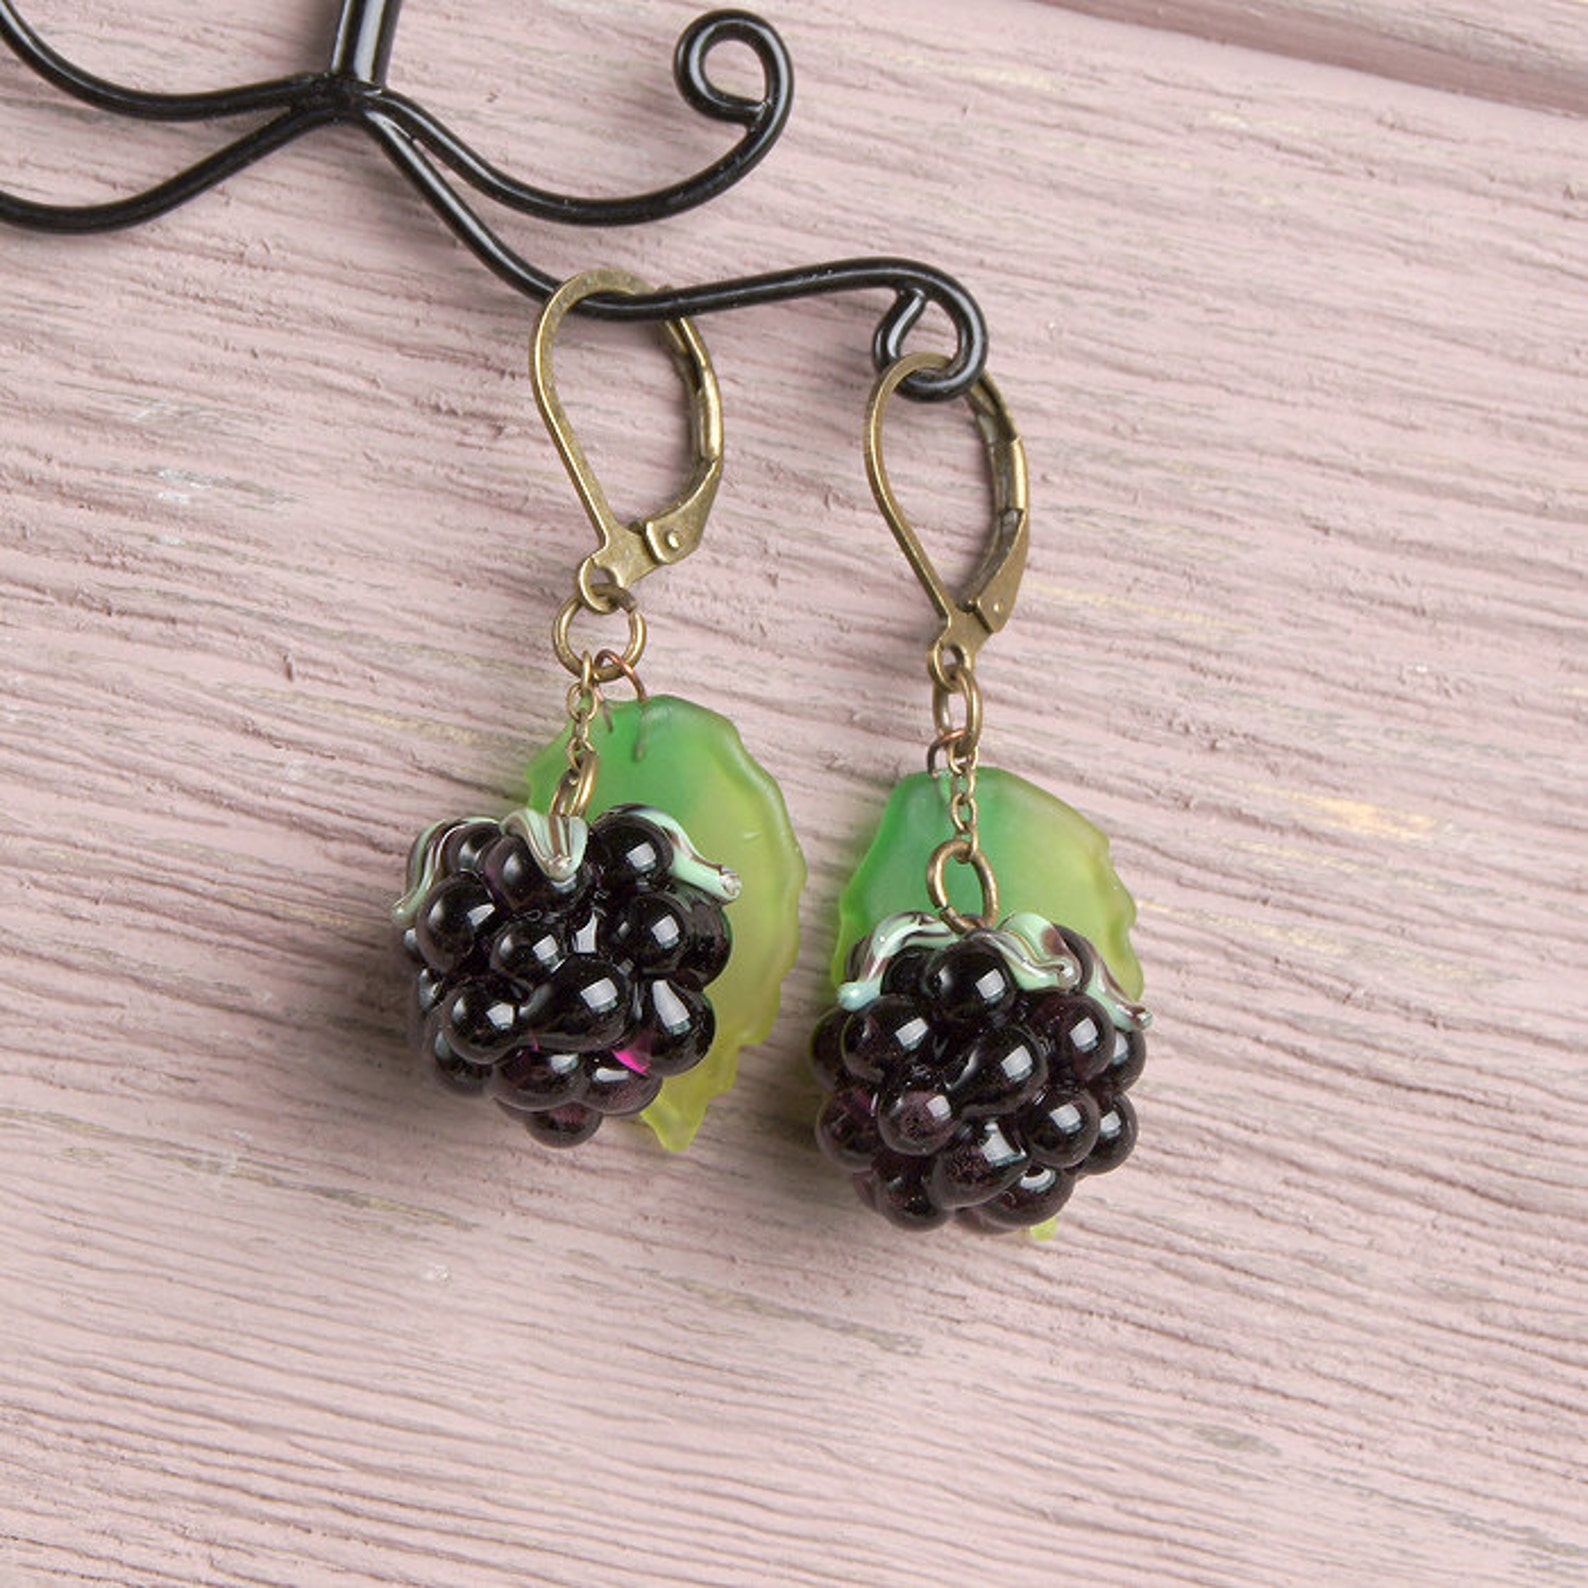 Blackberry earrings Black berry earrings Nature earrings | Etsy